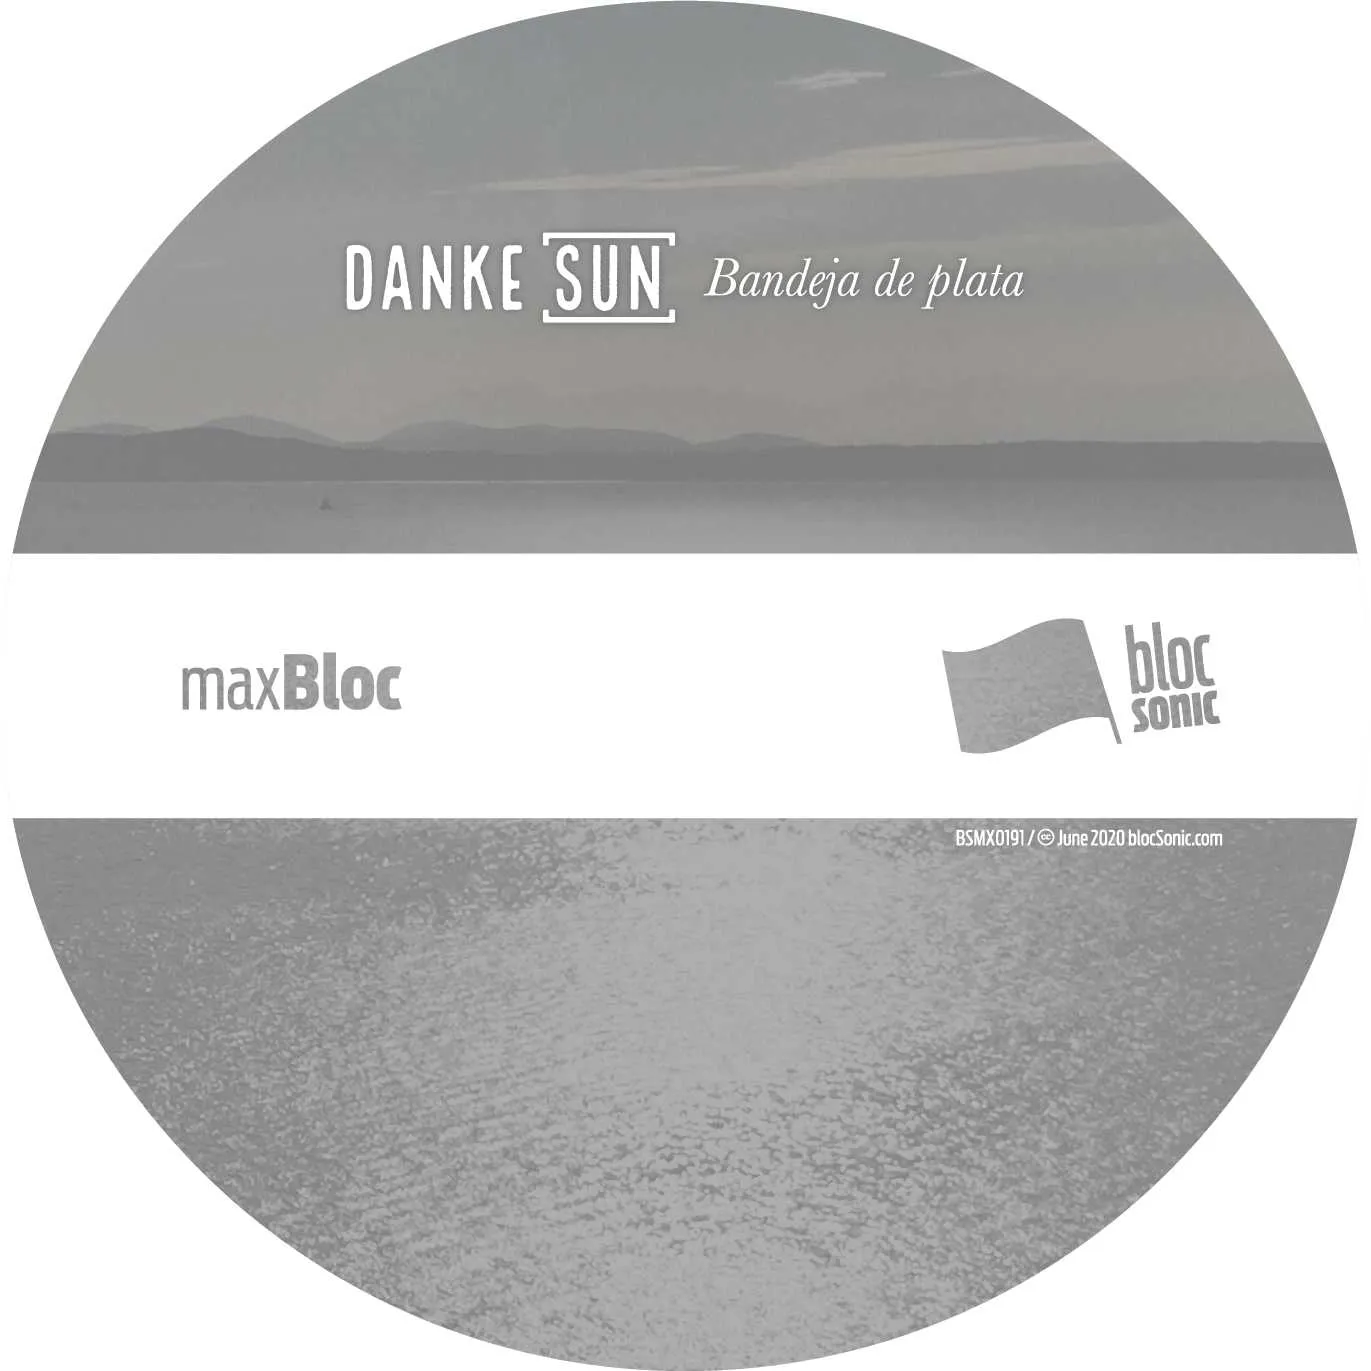 Album disc for “Bandeja de plata” by Danke Sun